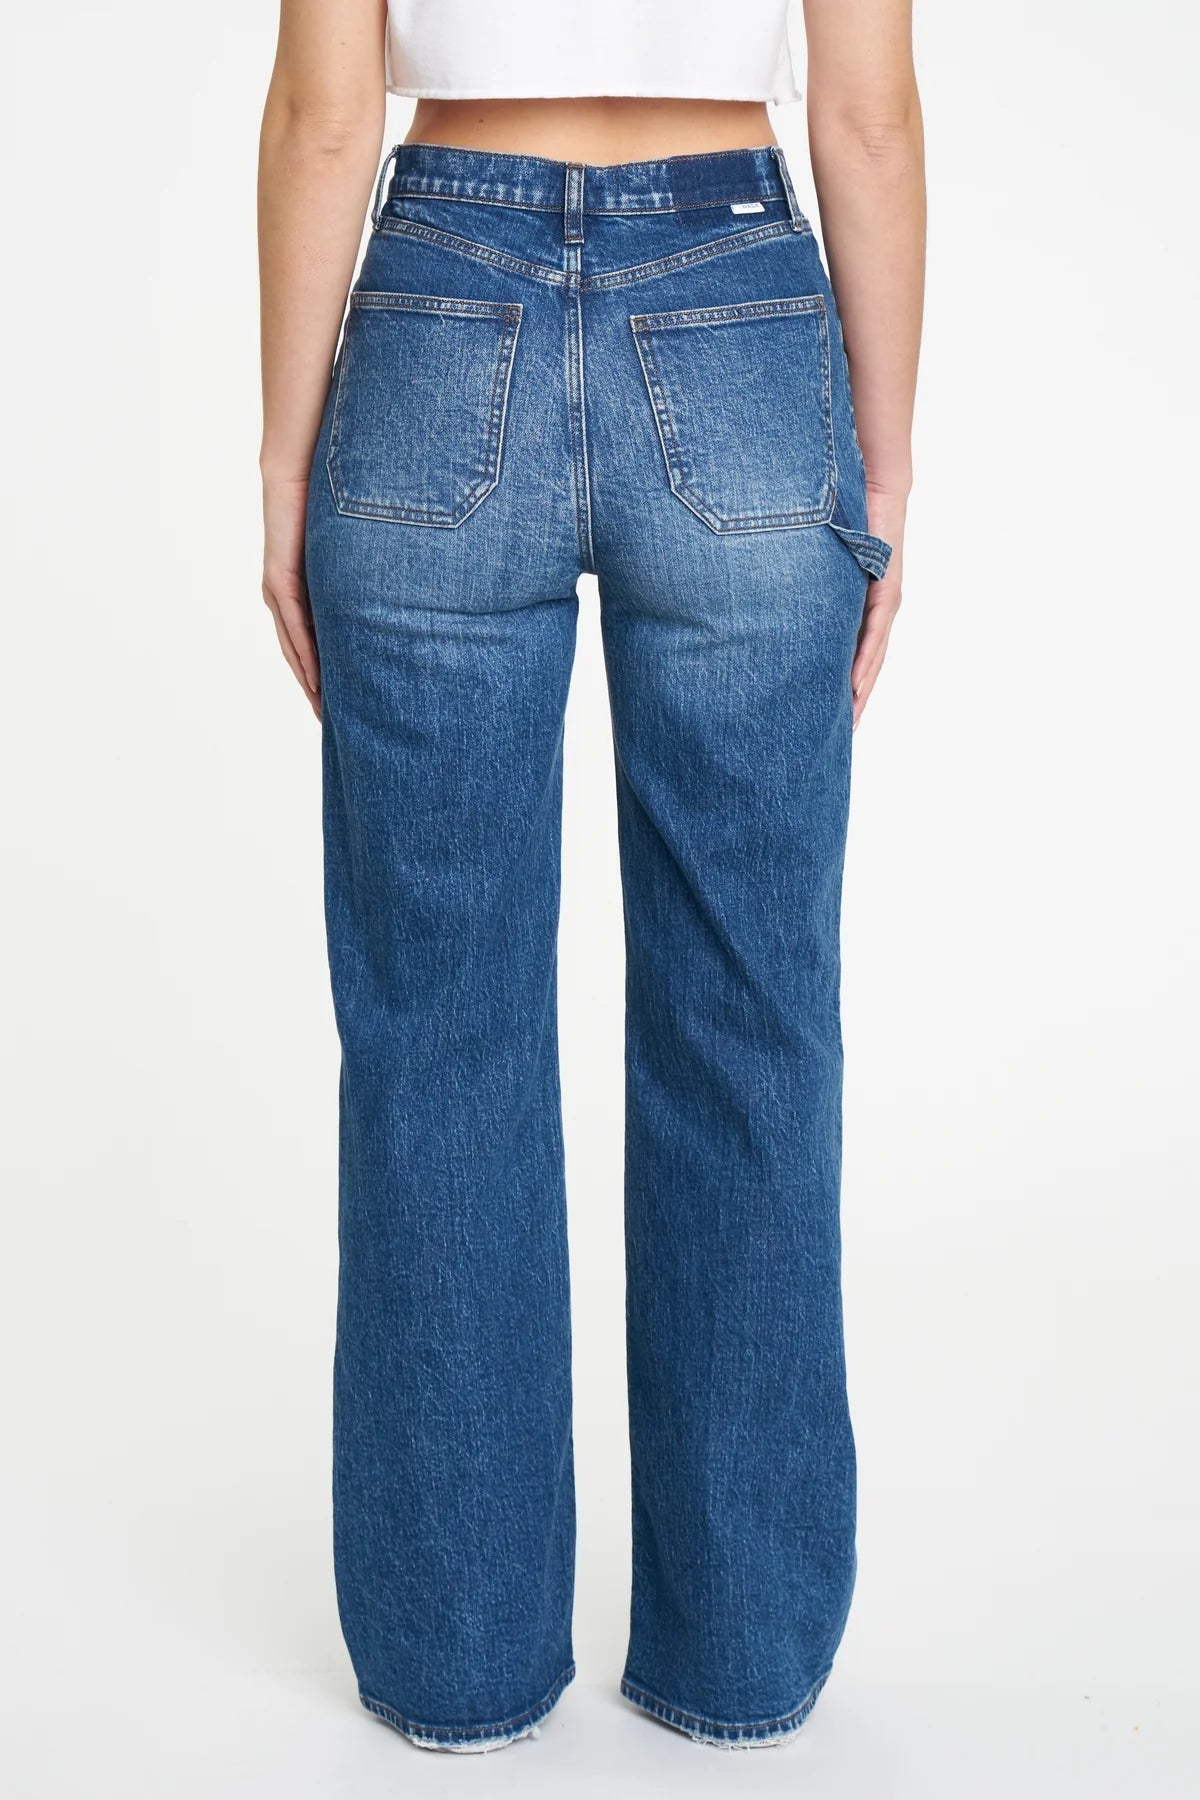 Daze Denim | Far Out Wide Leg Utility Jeans | Medium Wash - Women&#39;s Pants - Blooming Daily